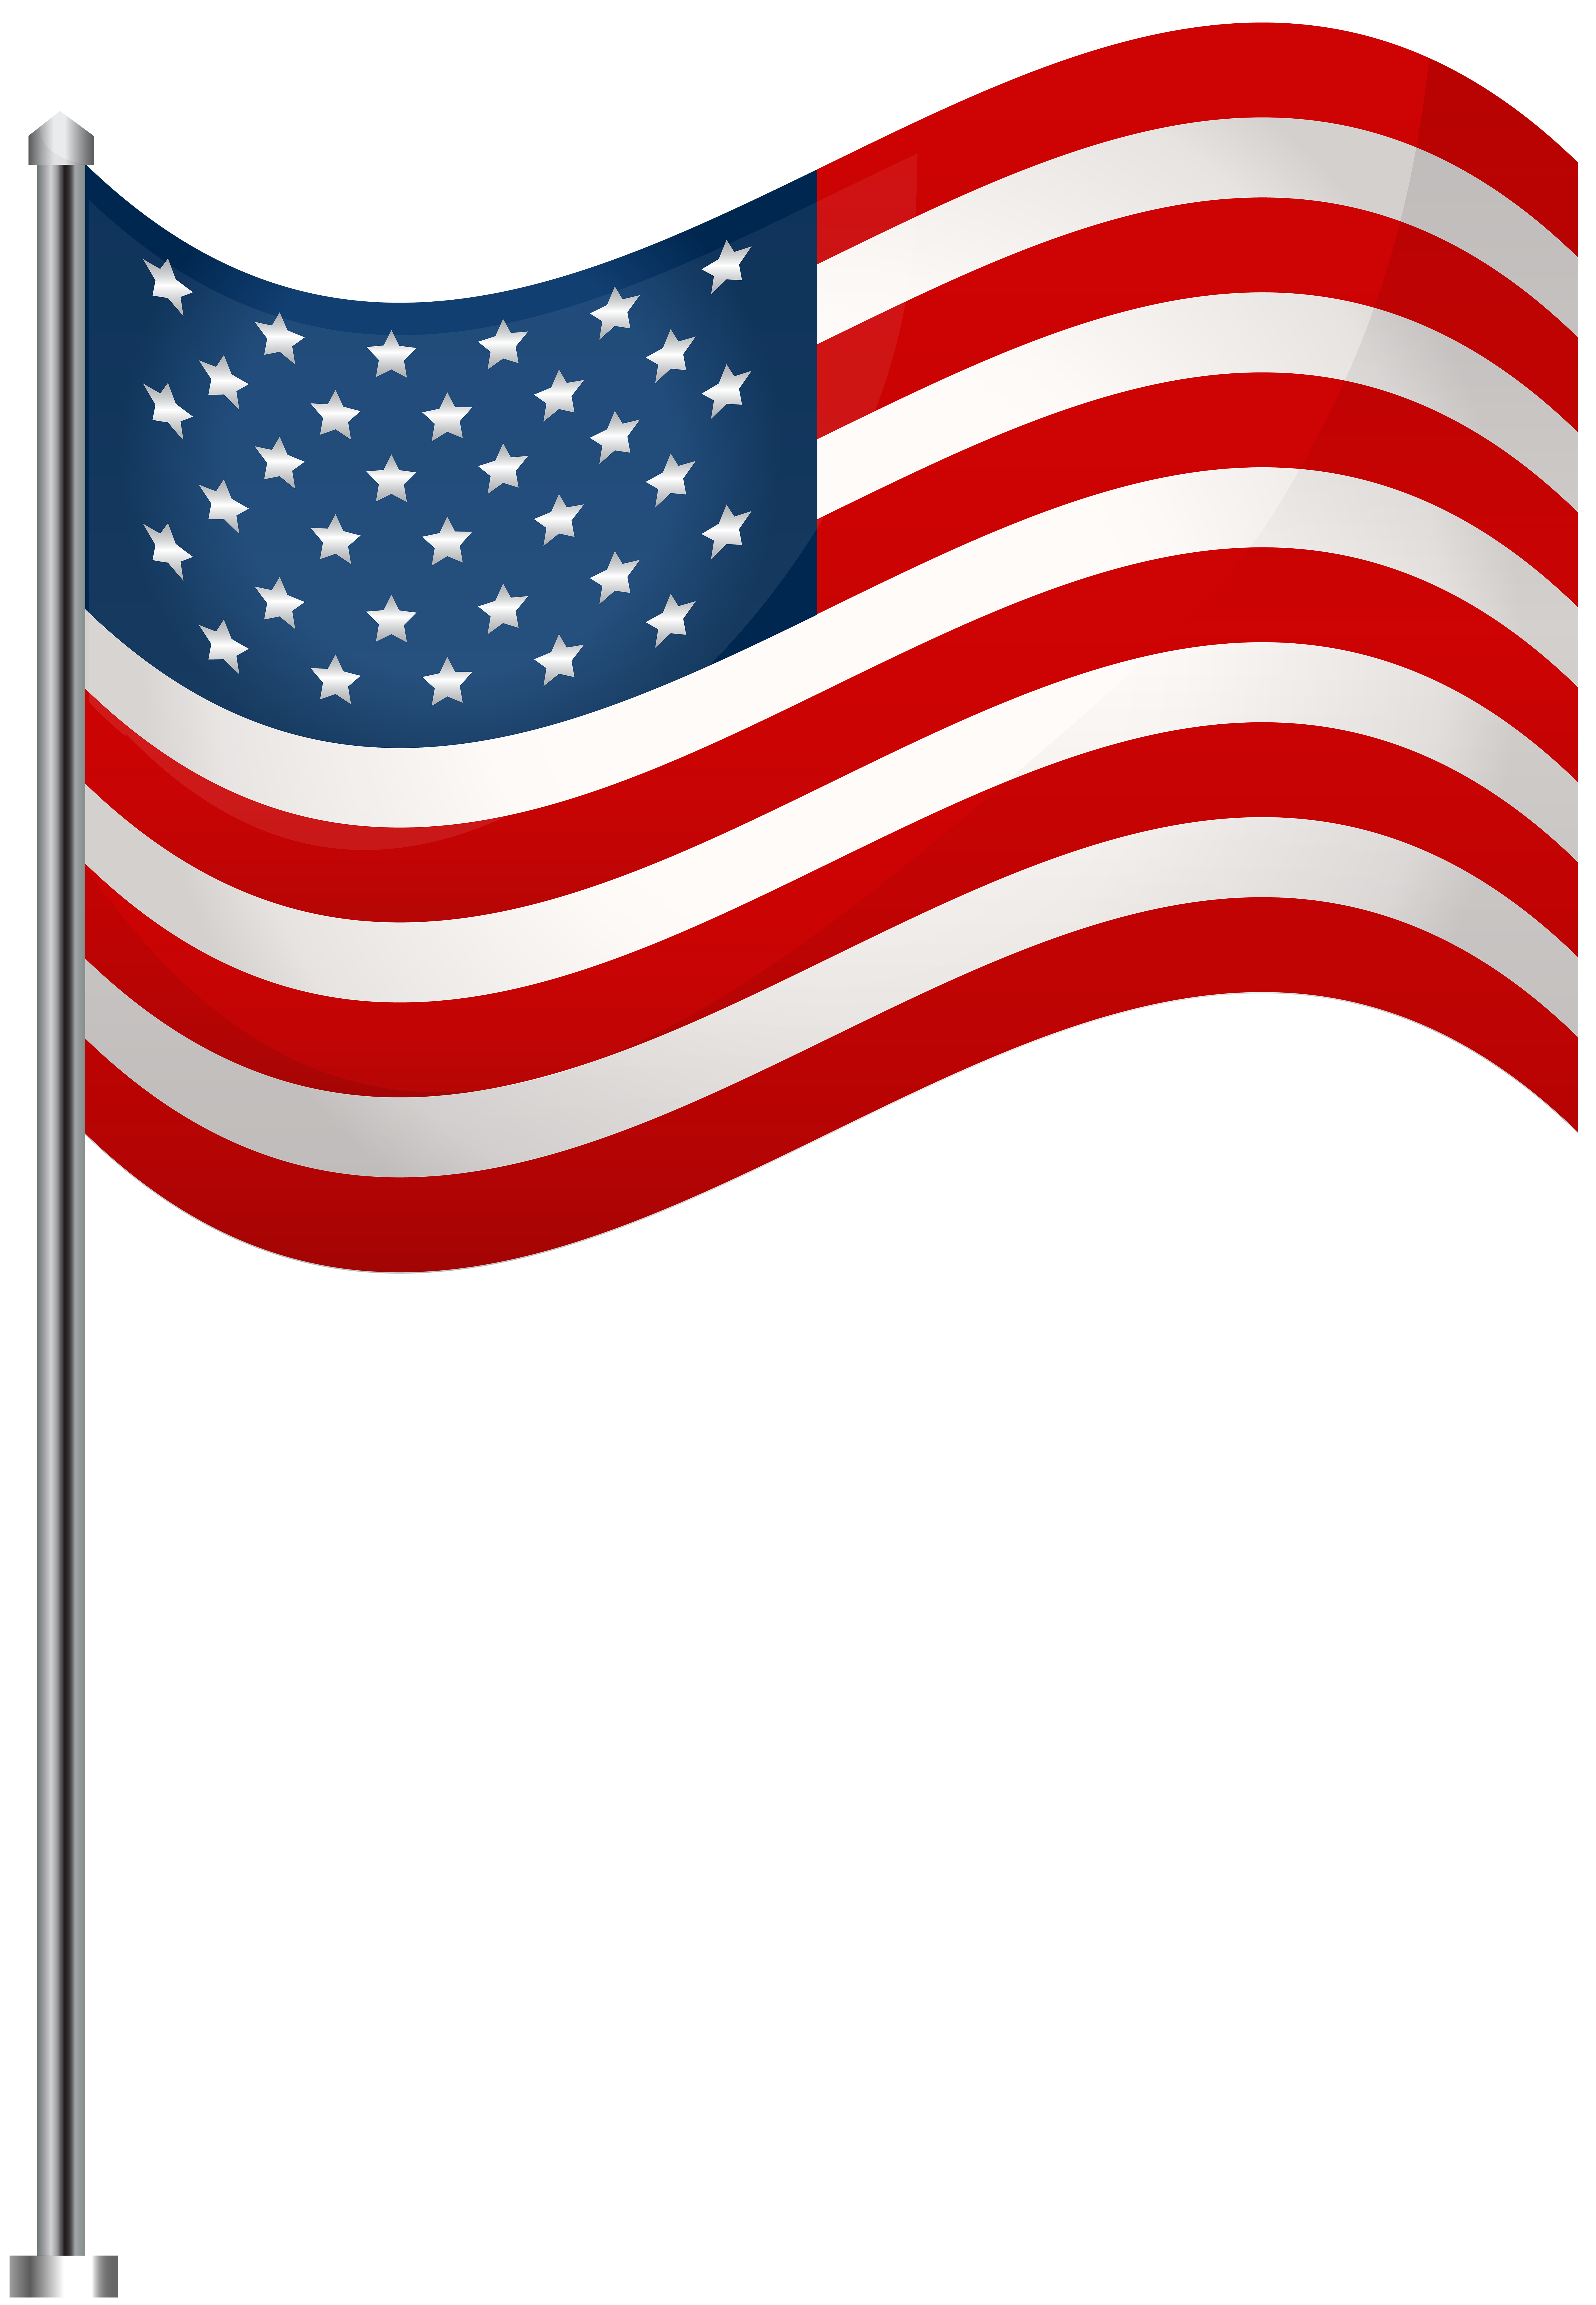 USA Waving Flag Transparent PNG Clip Art Image.